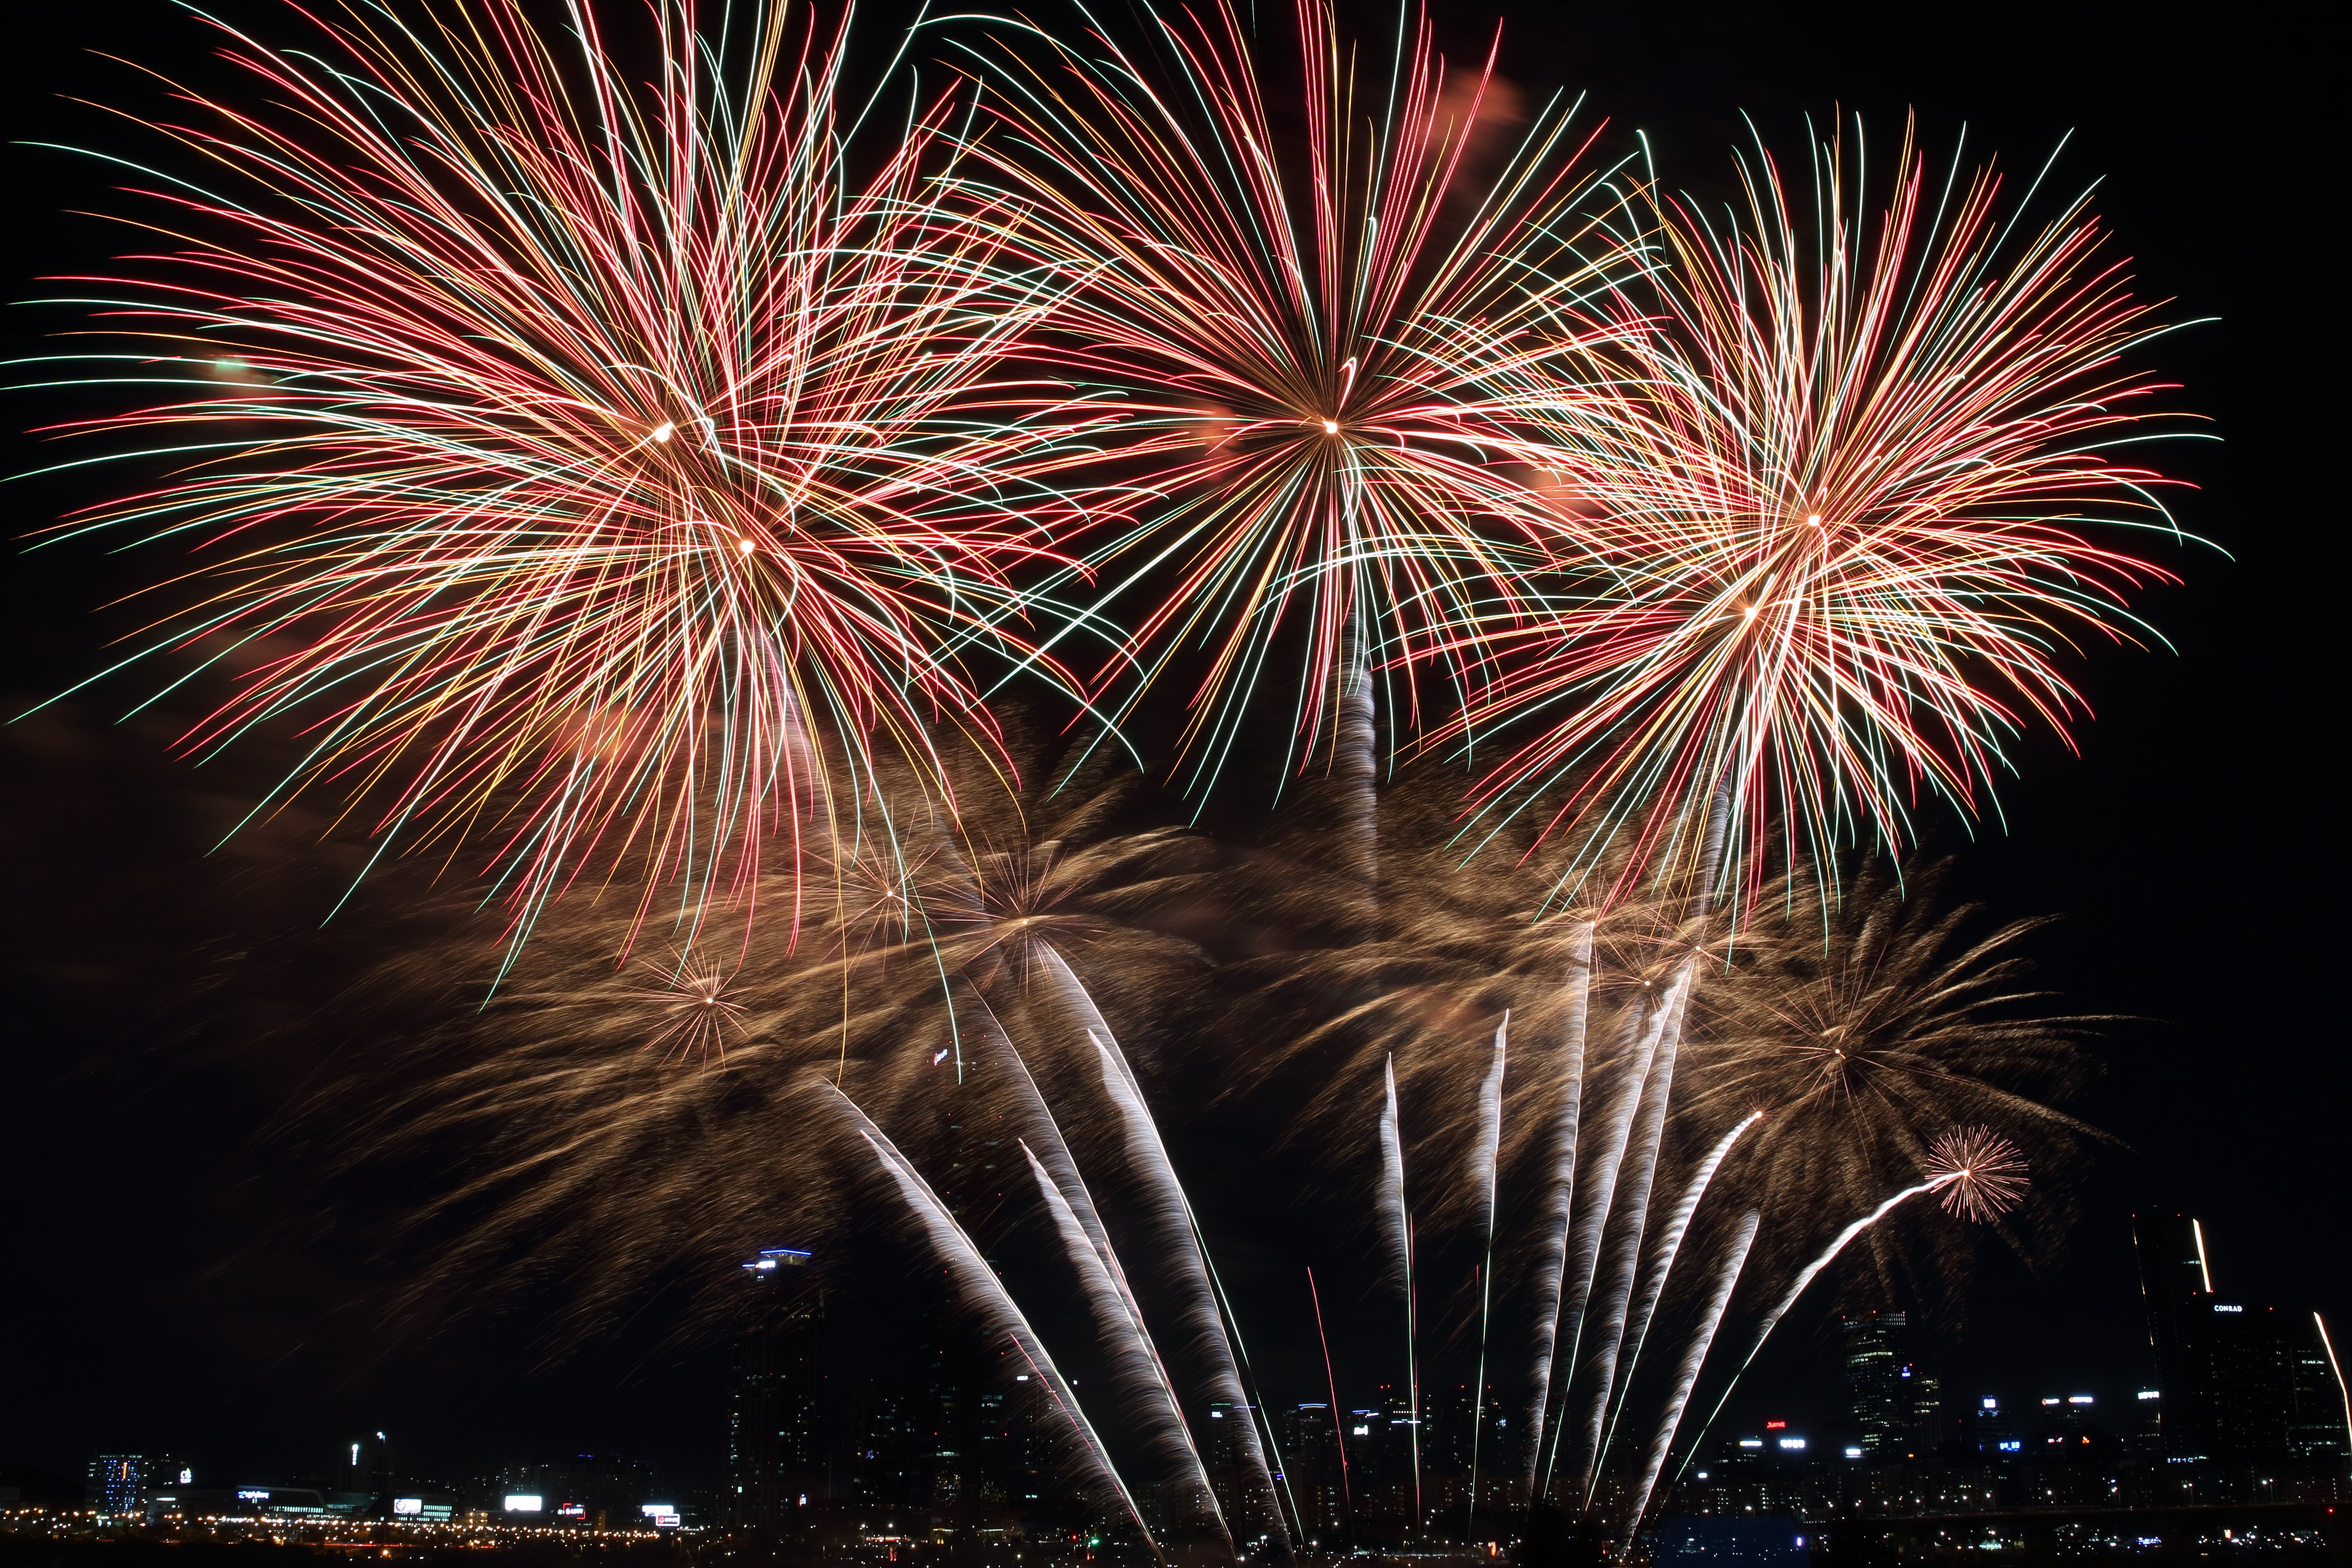 brocade fireworks aerial display at night, seoul international fireworks festival